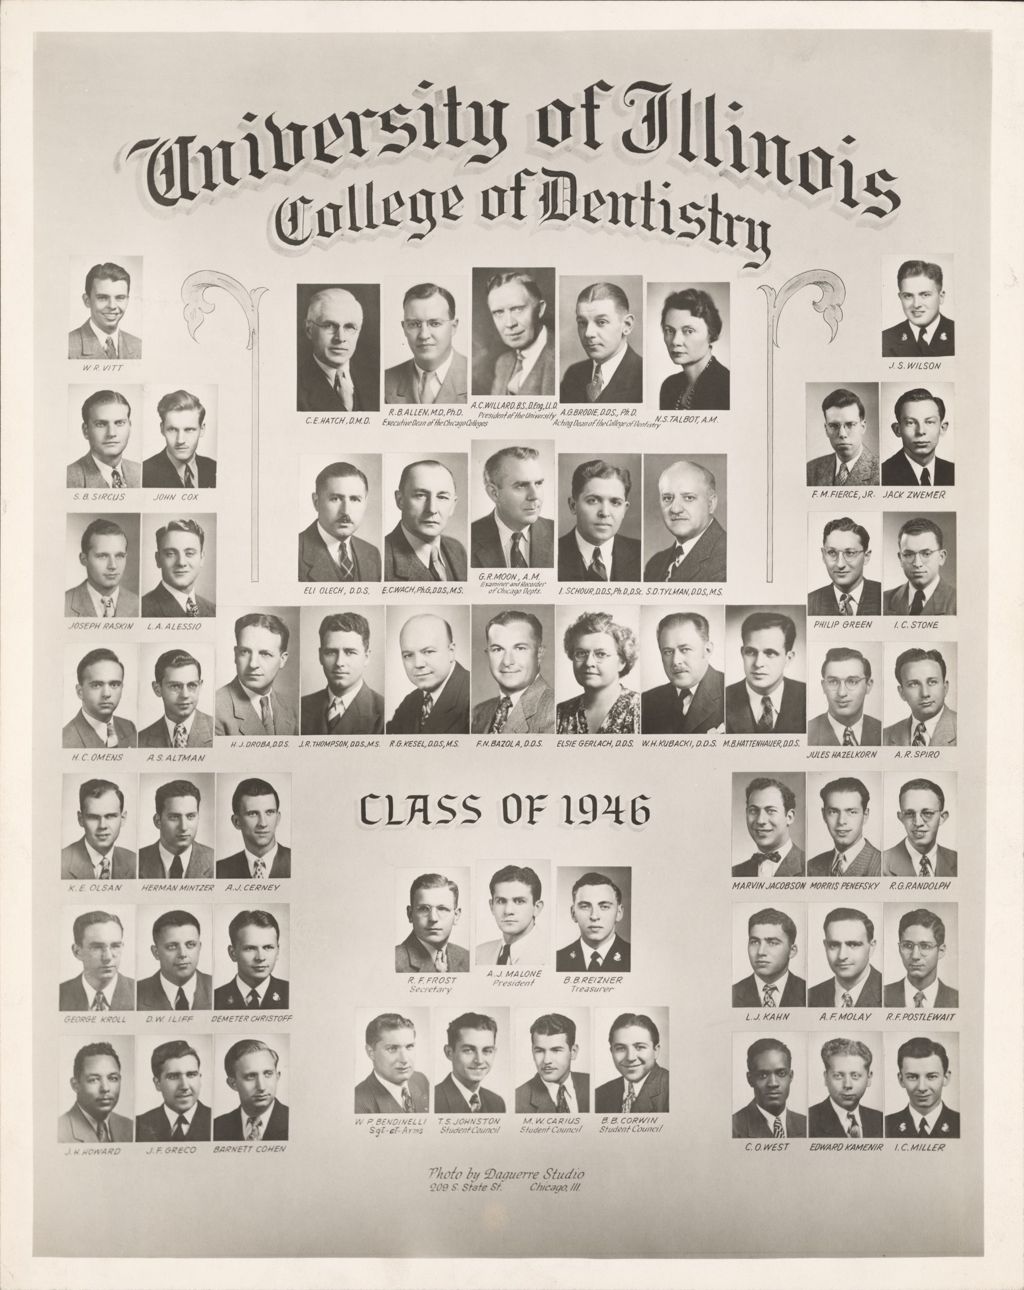 Miniature of 1946 graduating class, University of Illinois College of Dentistry